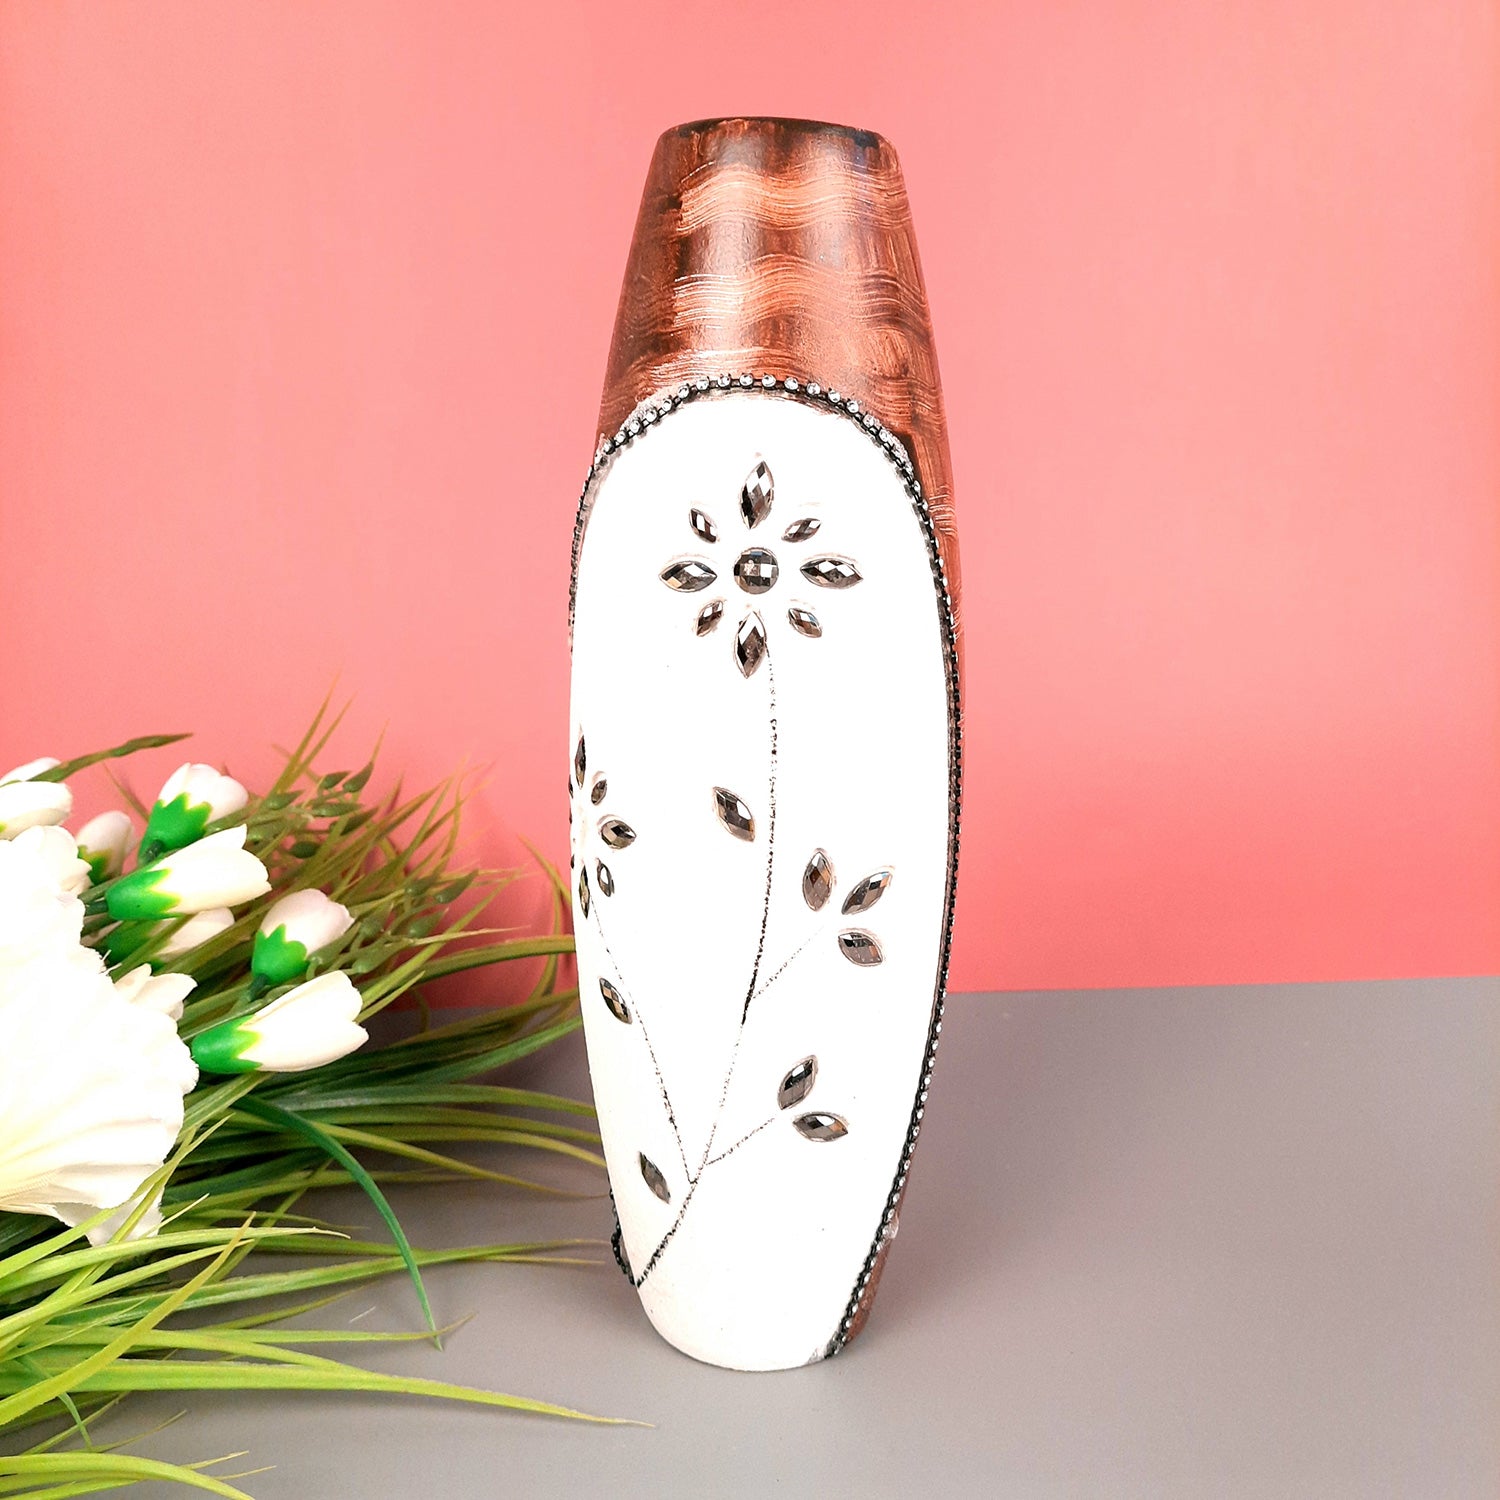 Decorative Vases | Flower Pots - for Home, Living Room, Table & Office Decor - 12 Inch - Apkamart